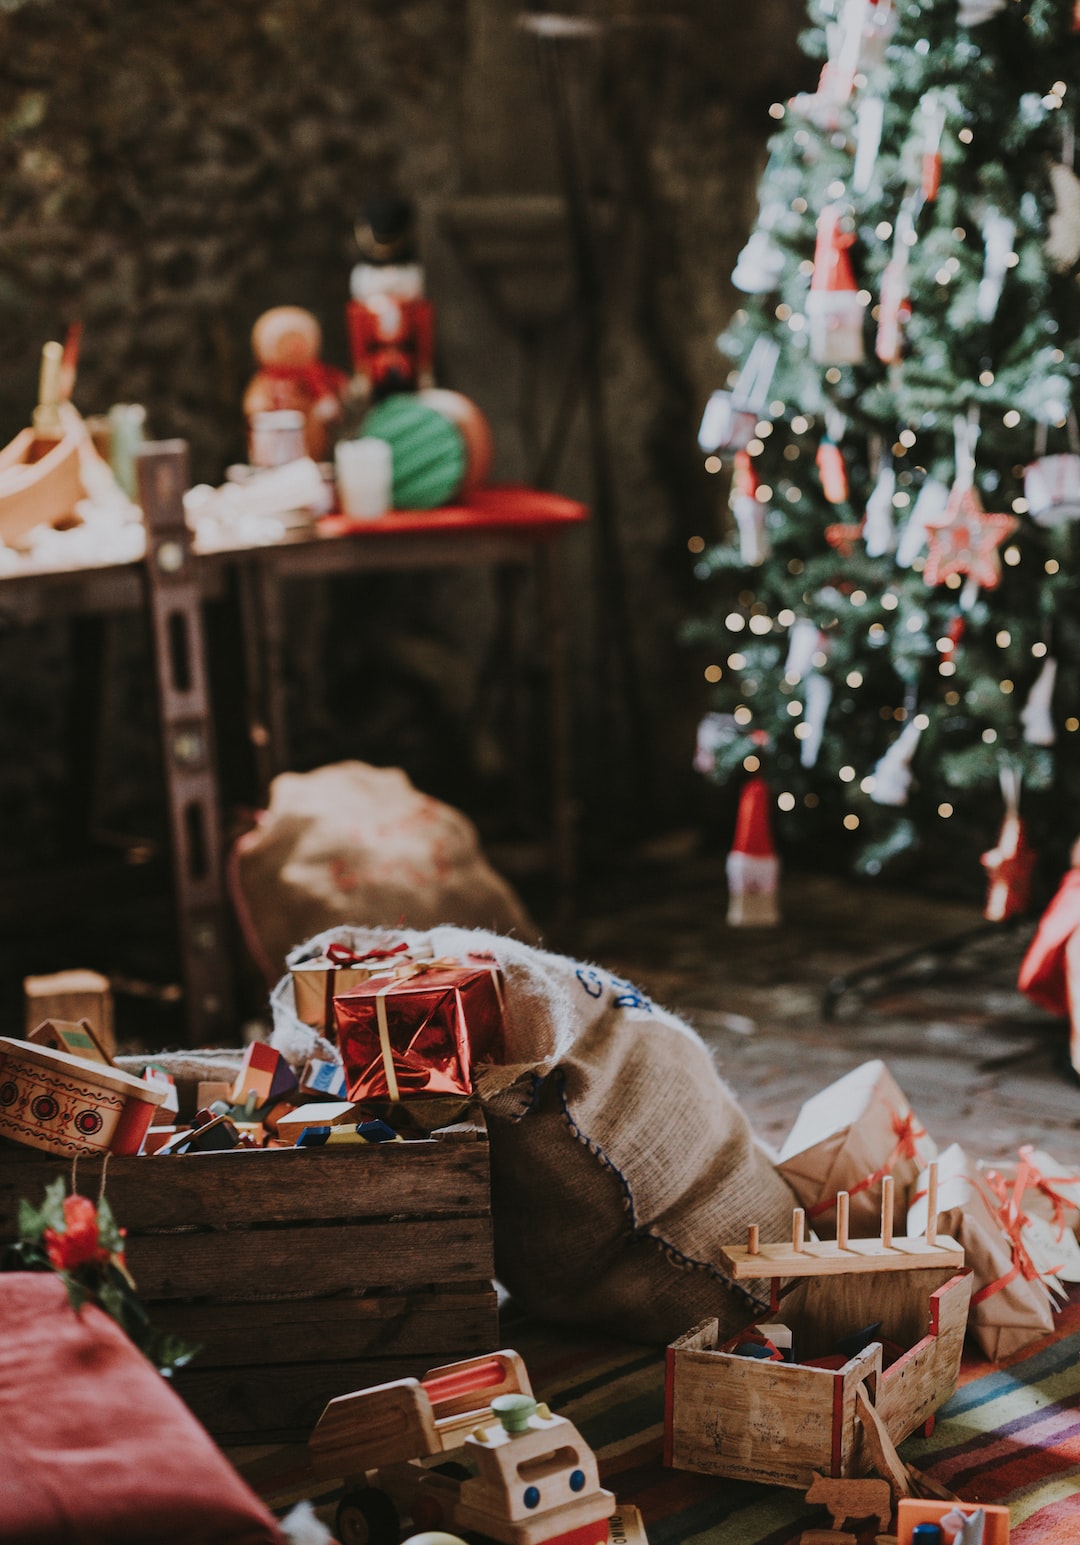 Christmas tree, gifts, festive scene